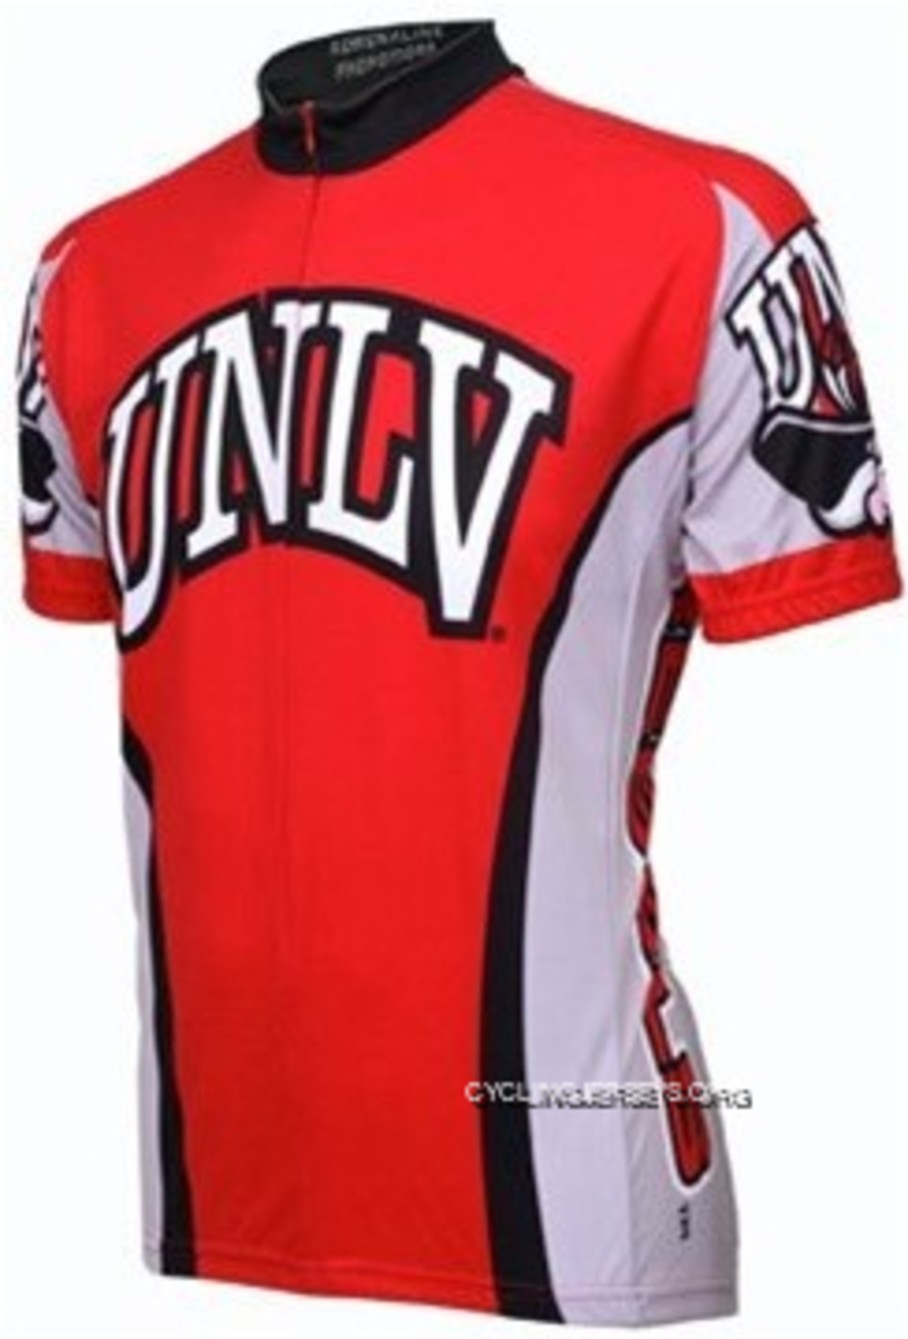 University Of Las Vegas UNLV Rebels Cycling Short Sleeve Jersey Cheap To Buy